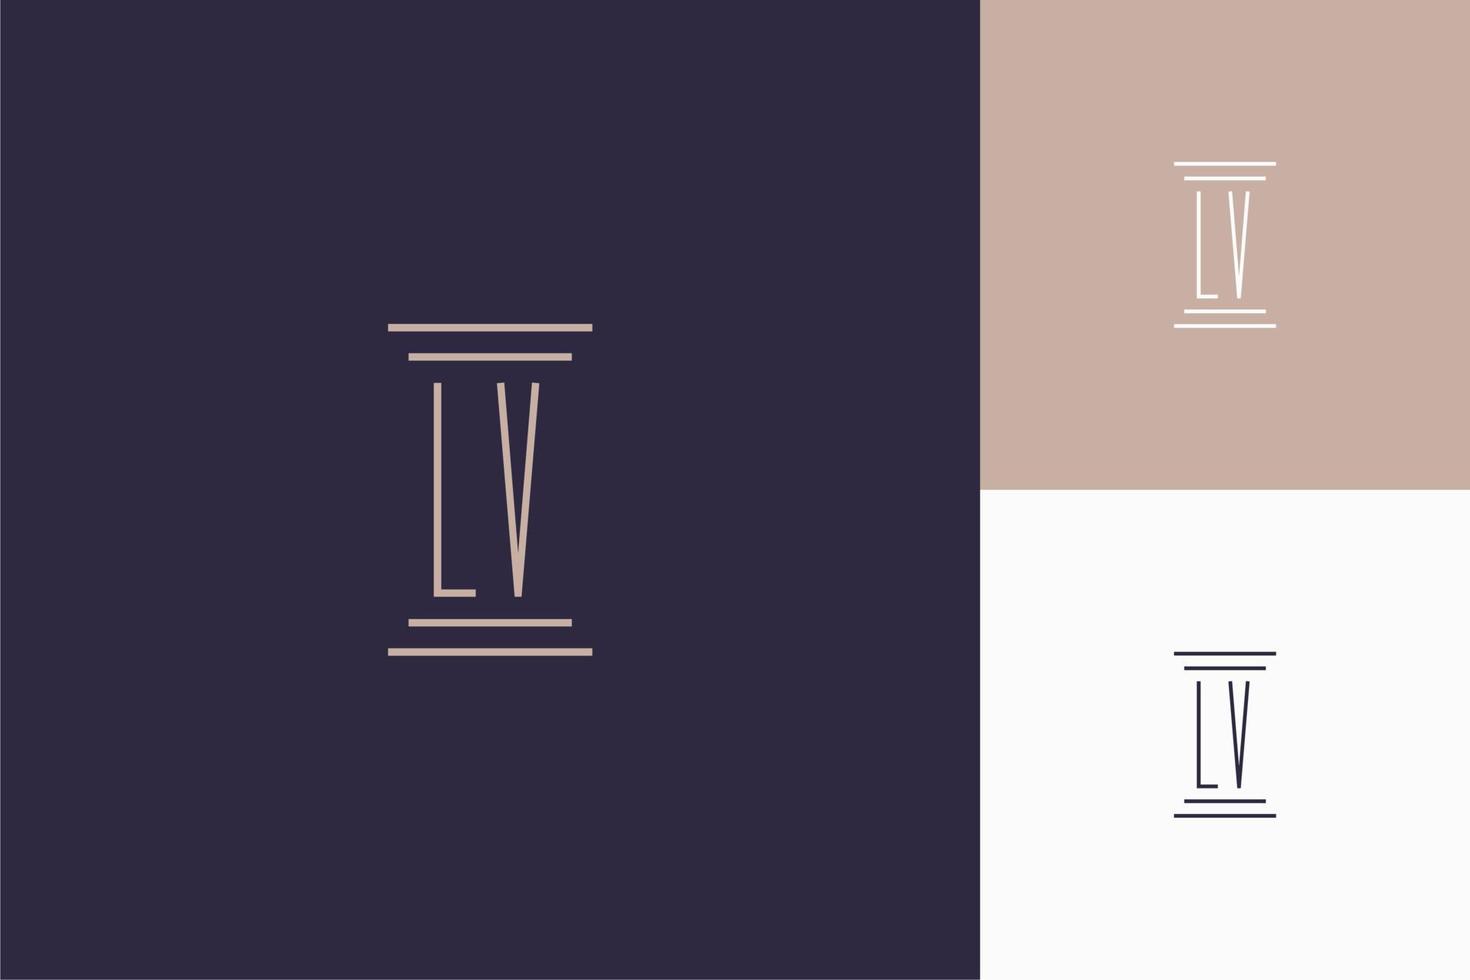 LV monogram initials design for law firm logo vector